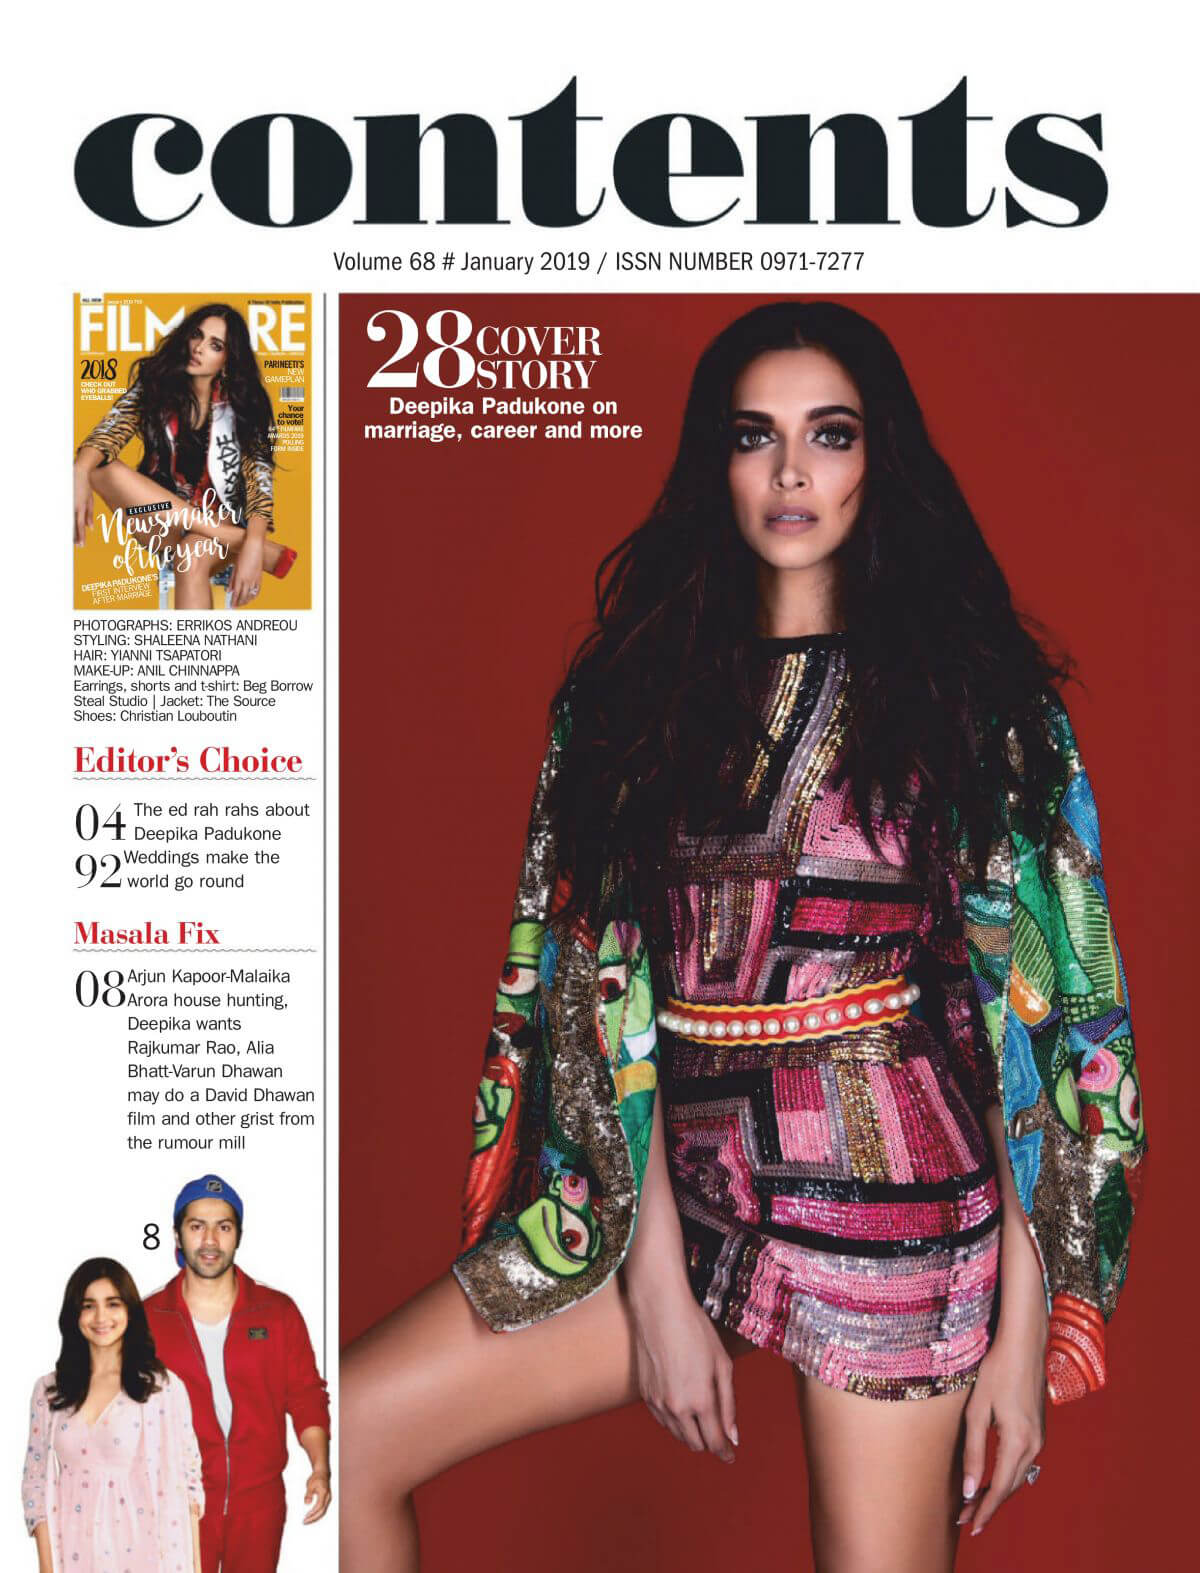 Deepika Padukone in Filmfare Magazine, January 2019